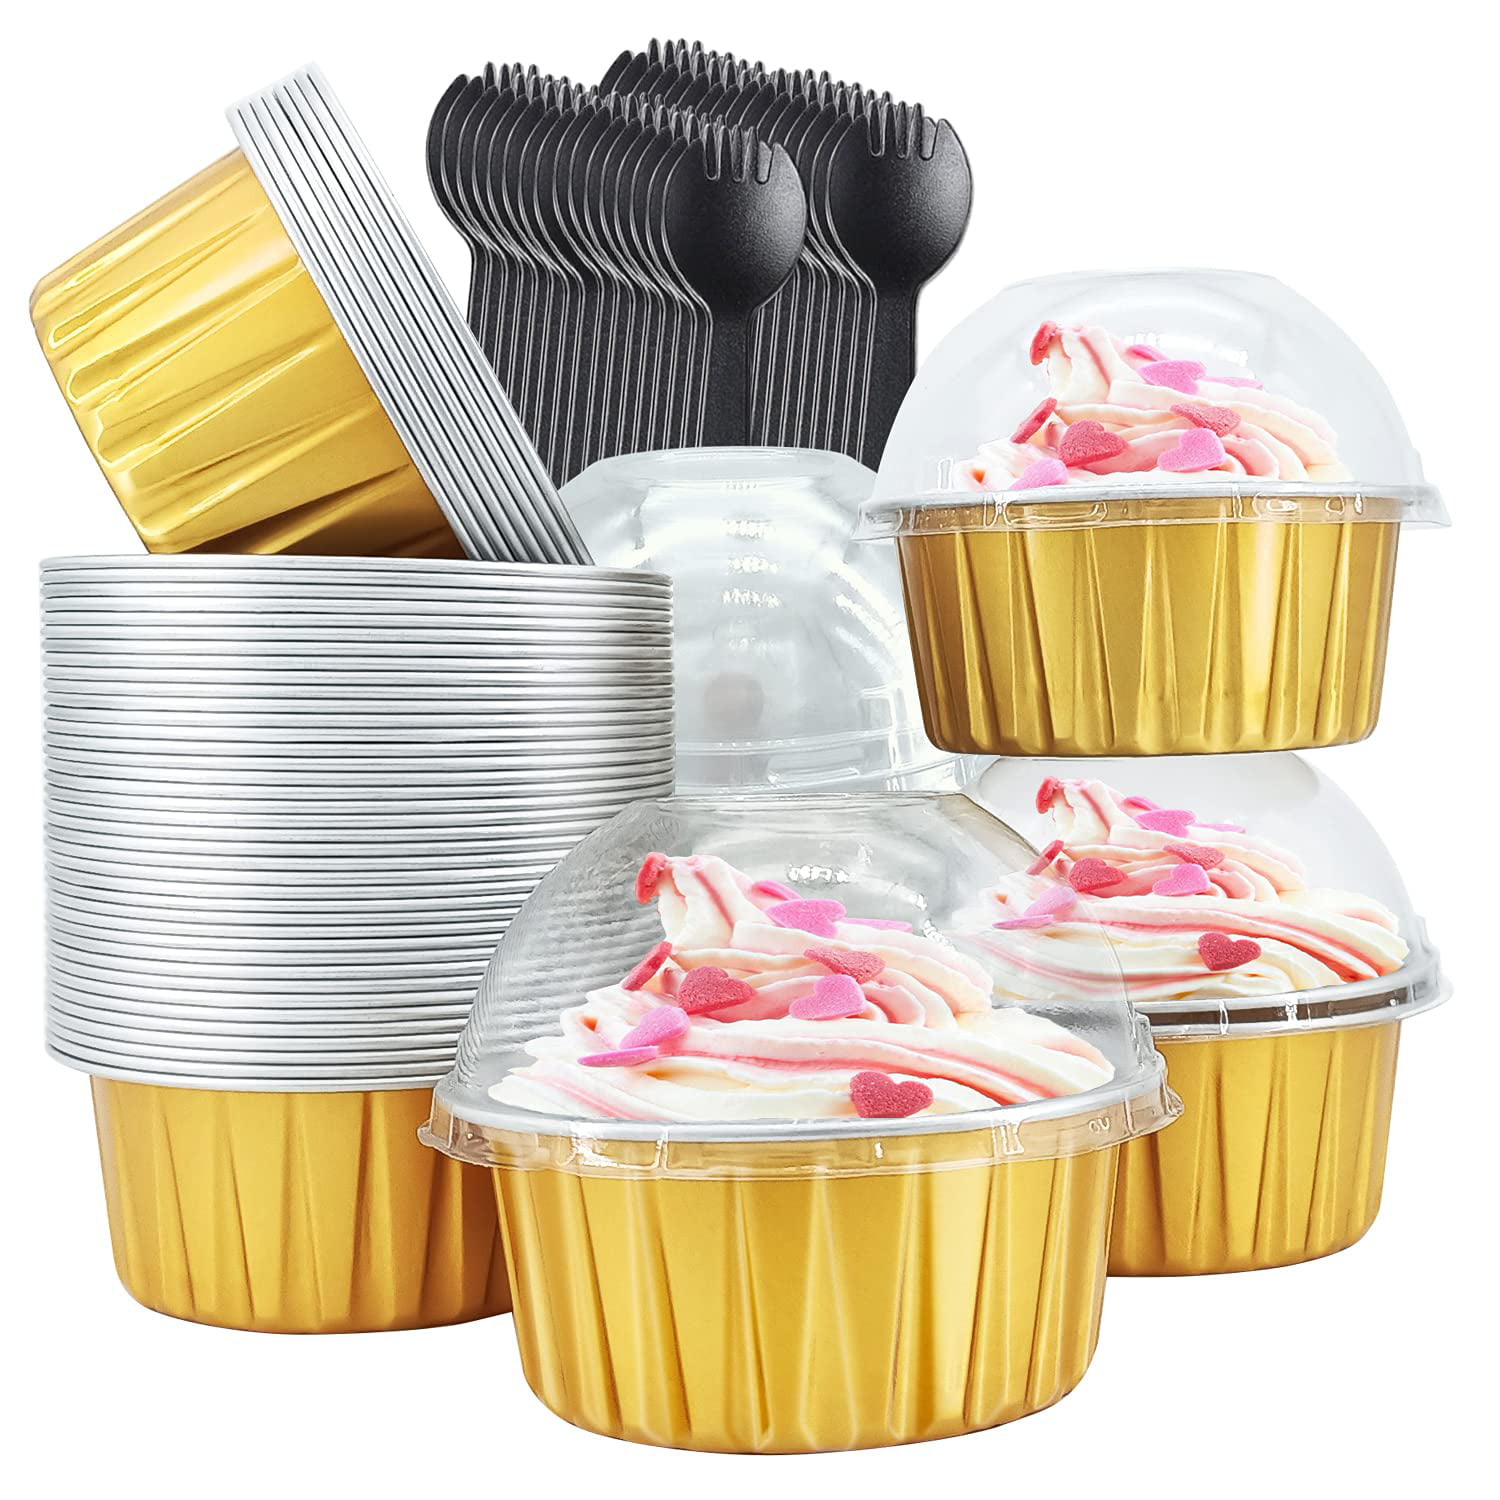 EUSOAR cupcake Liners with lids, 5oz 50pcs Square Disposable